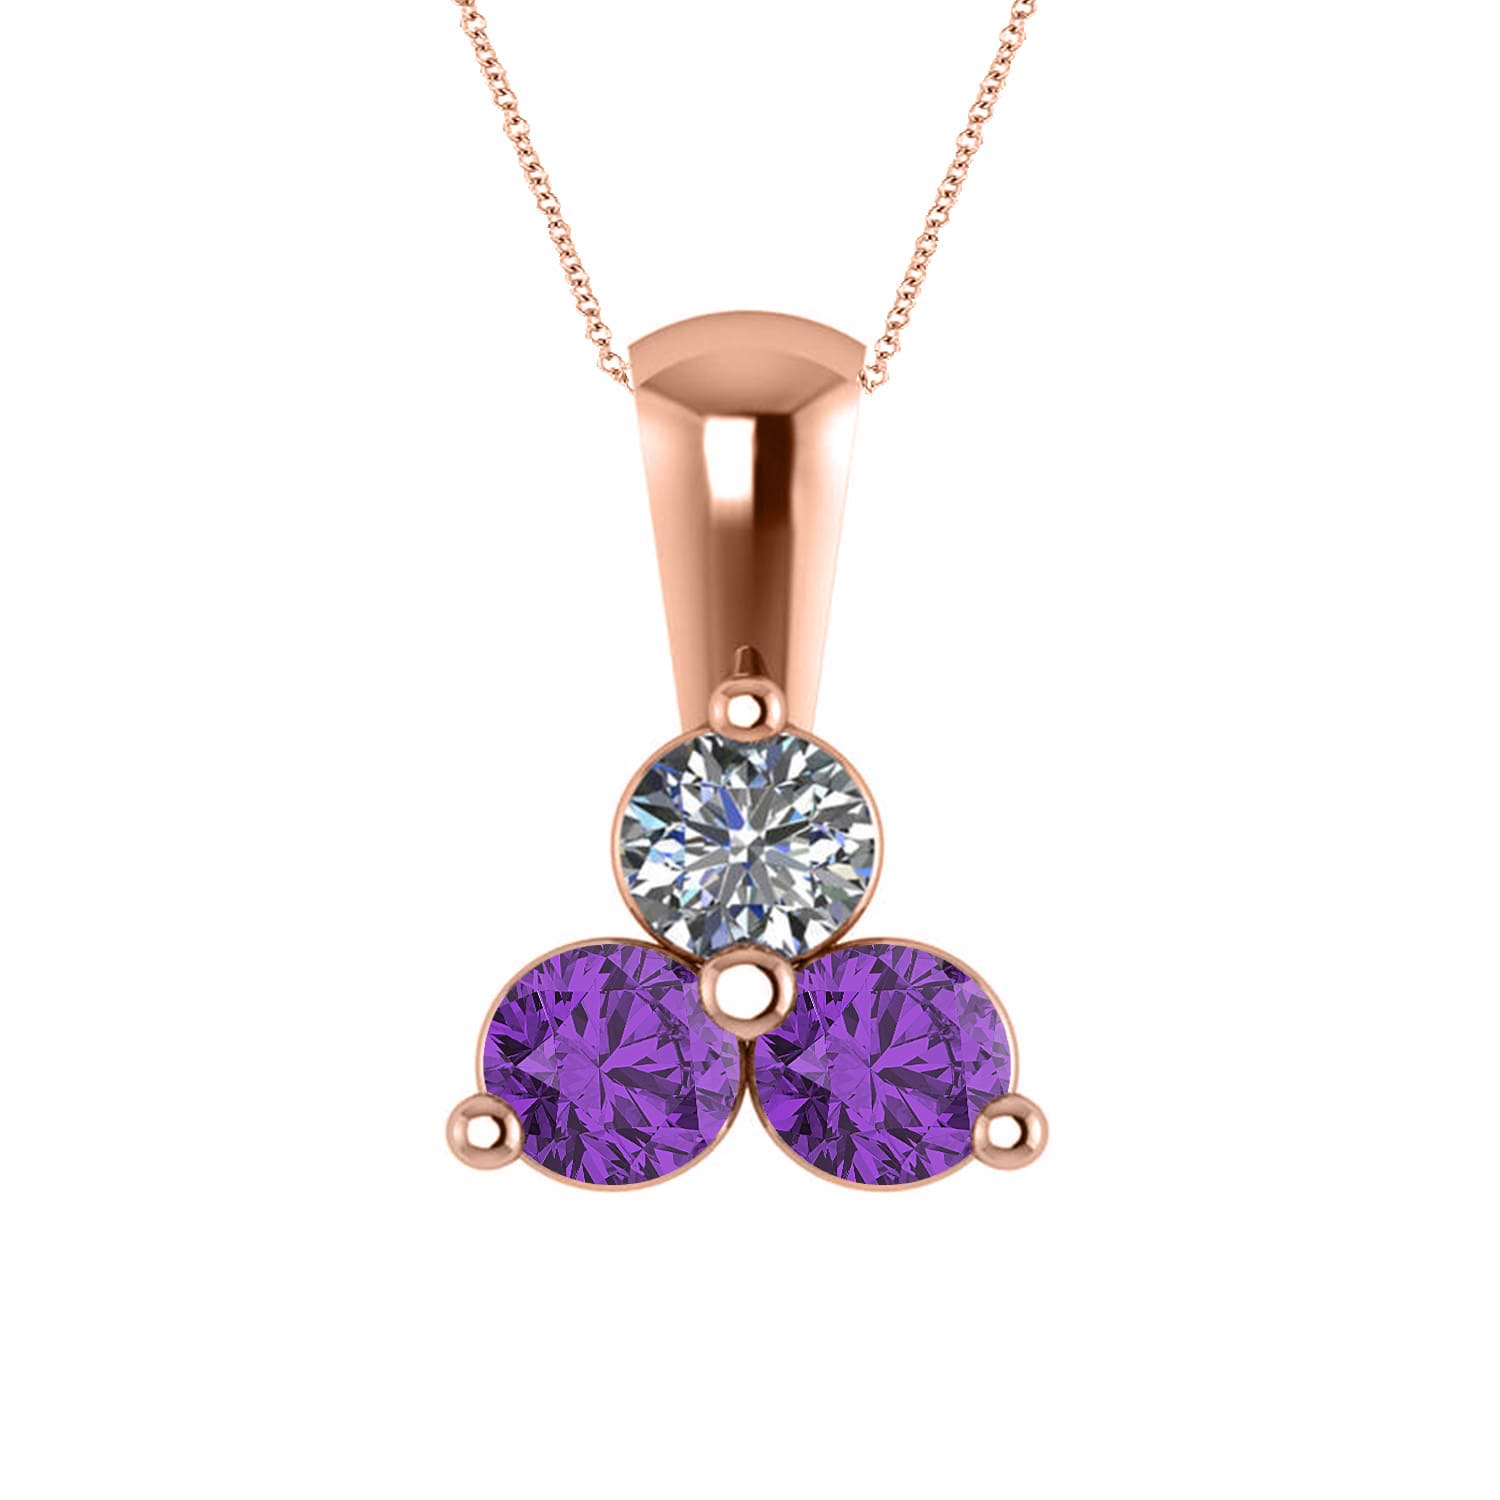 Three Stone Diamond & Amethyst Pendant Necklace 14k Rose Gold (1.00ct)